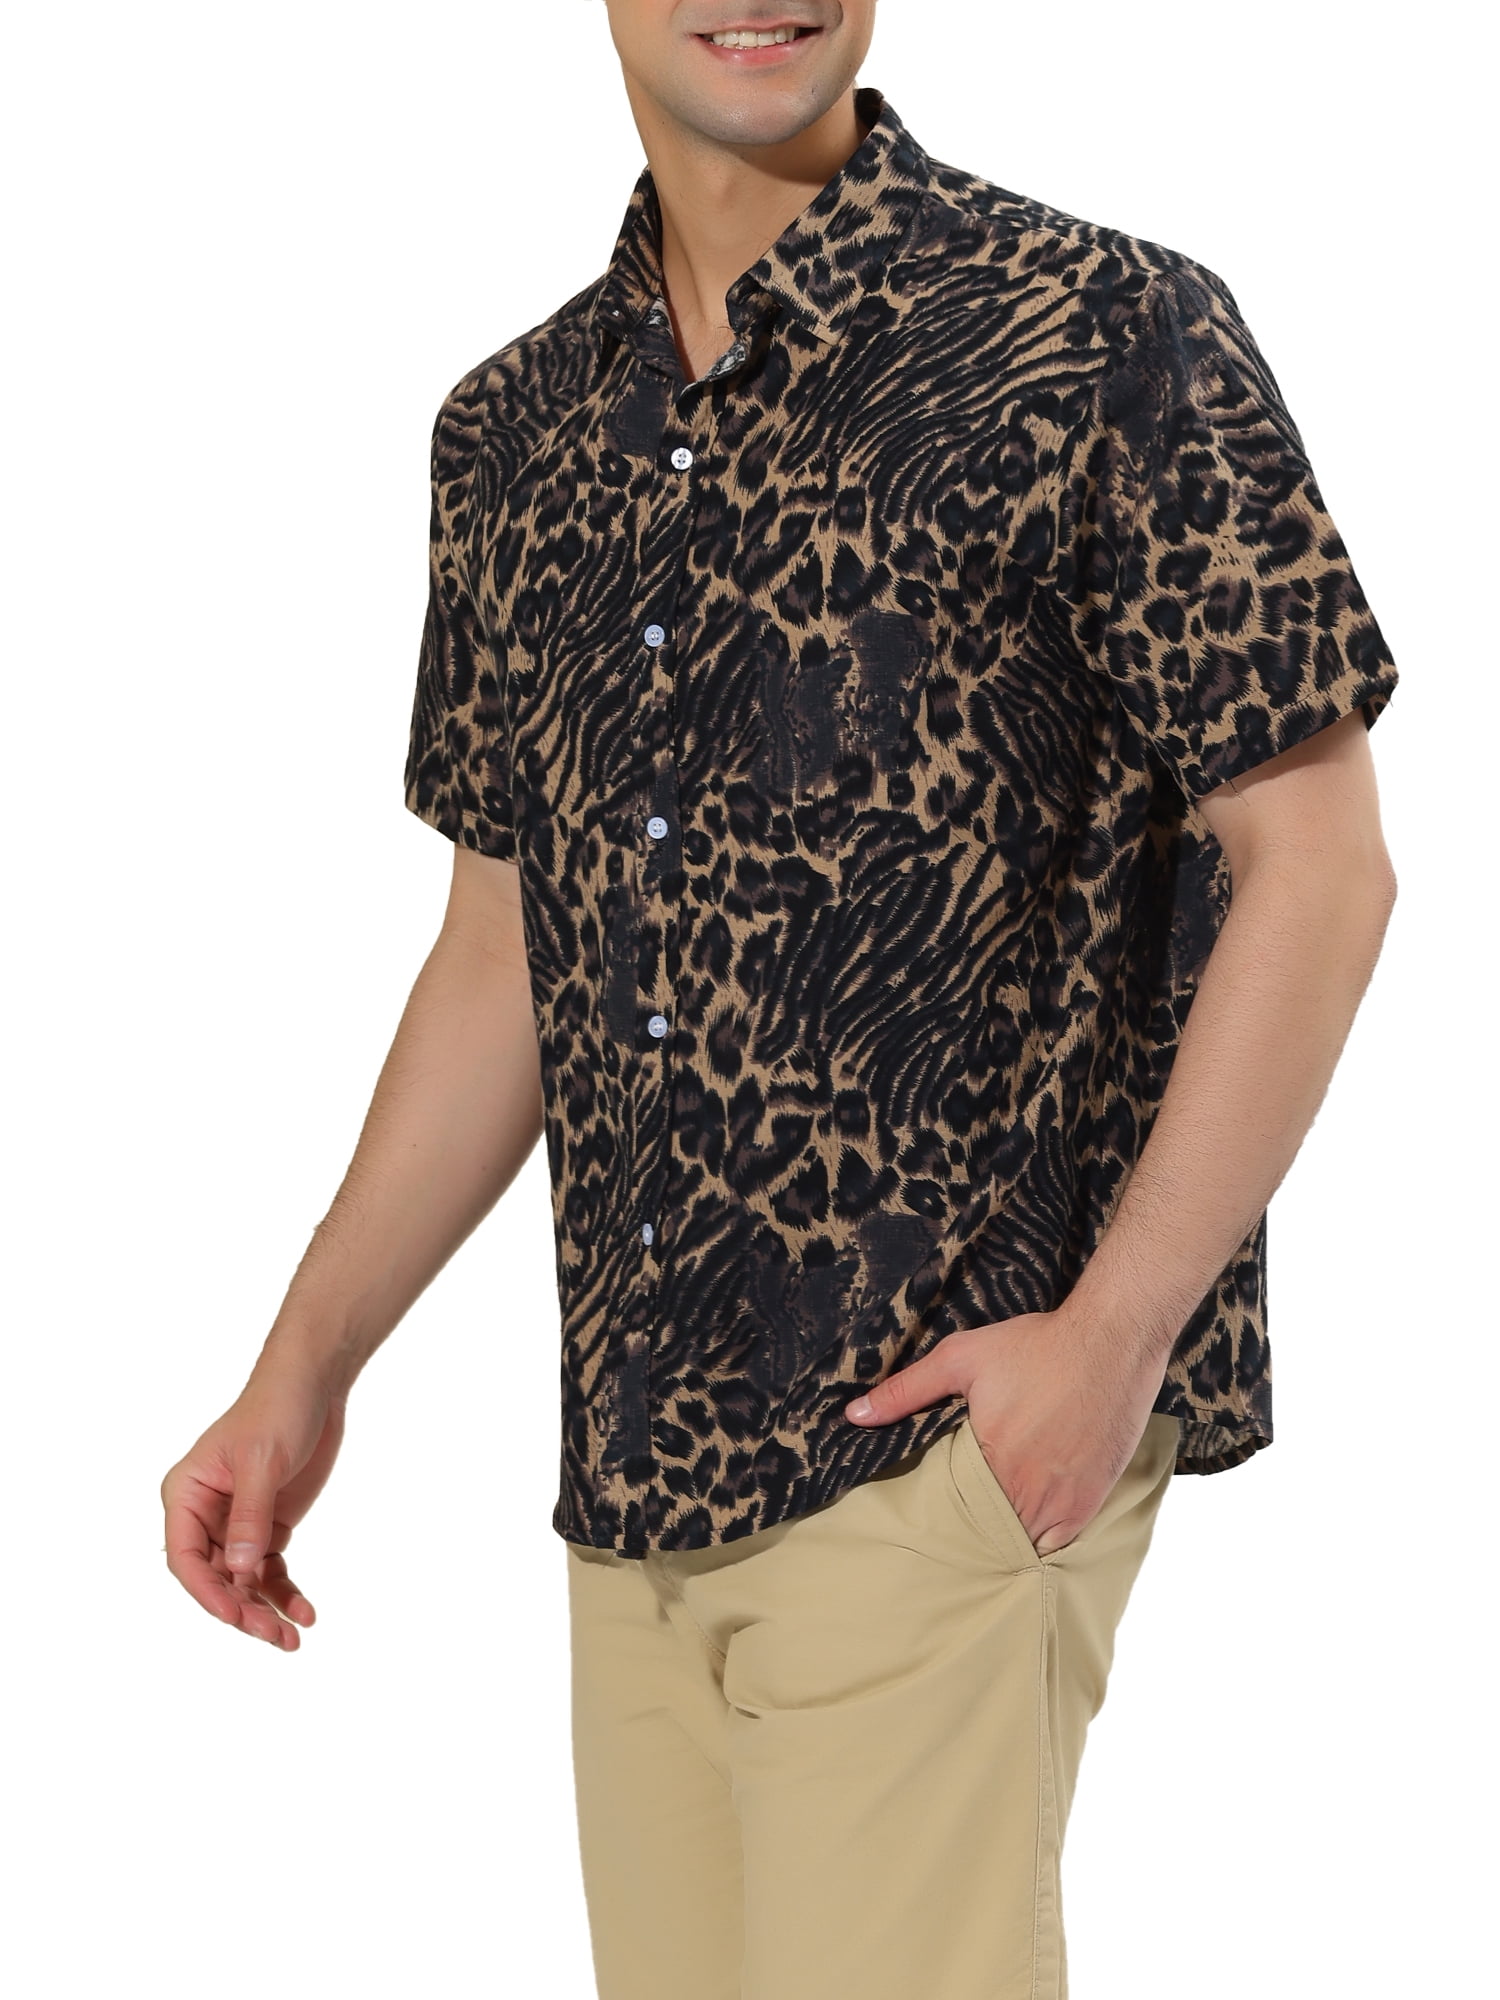 Lars Amadeus Men's Leopard Print Short Sleeve Vintage Animal Cheetah Print  Shirt